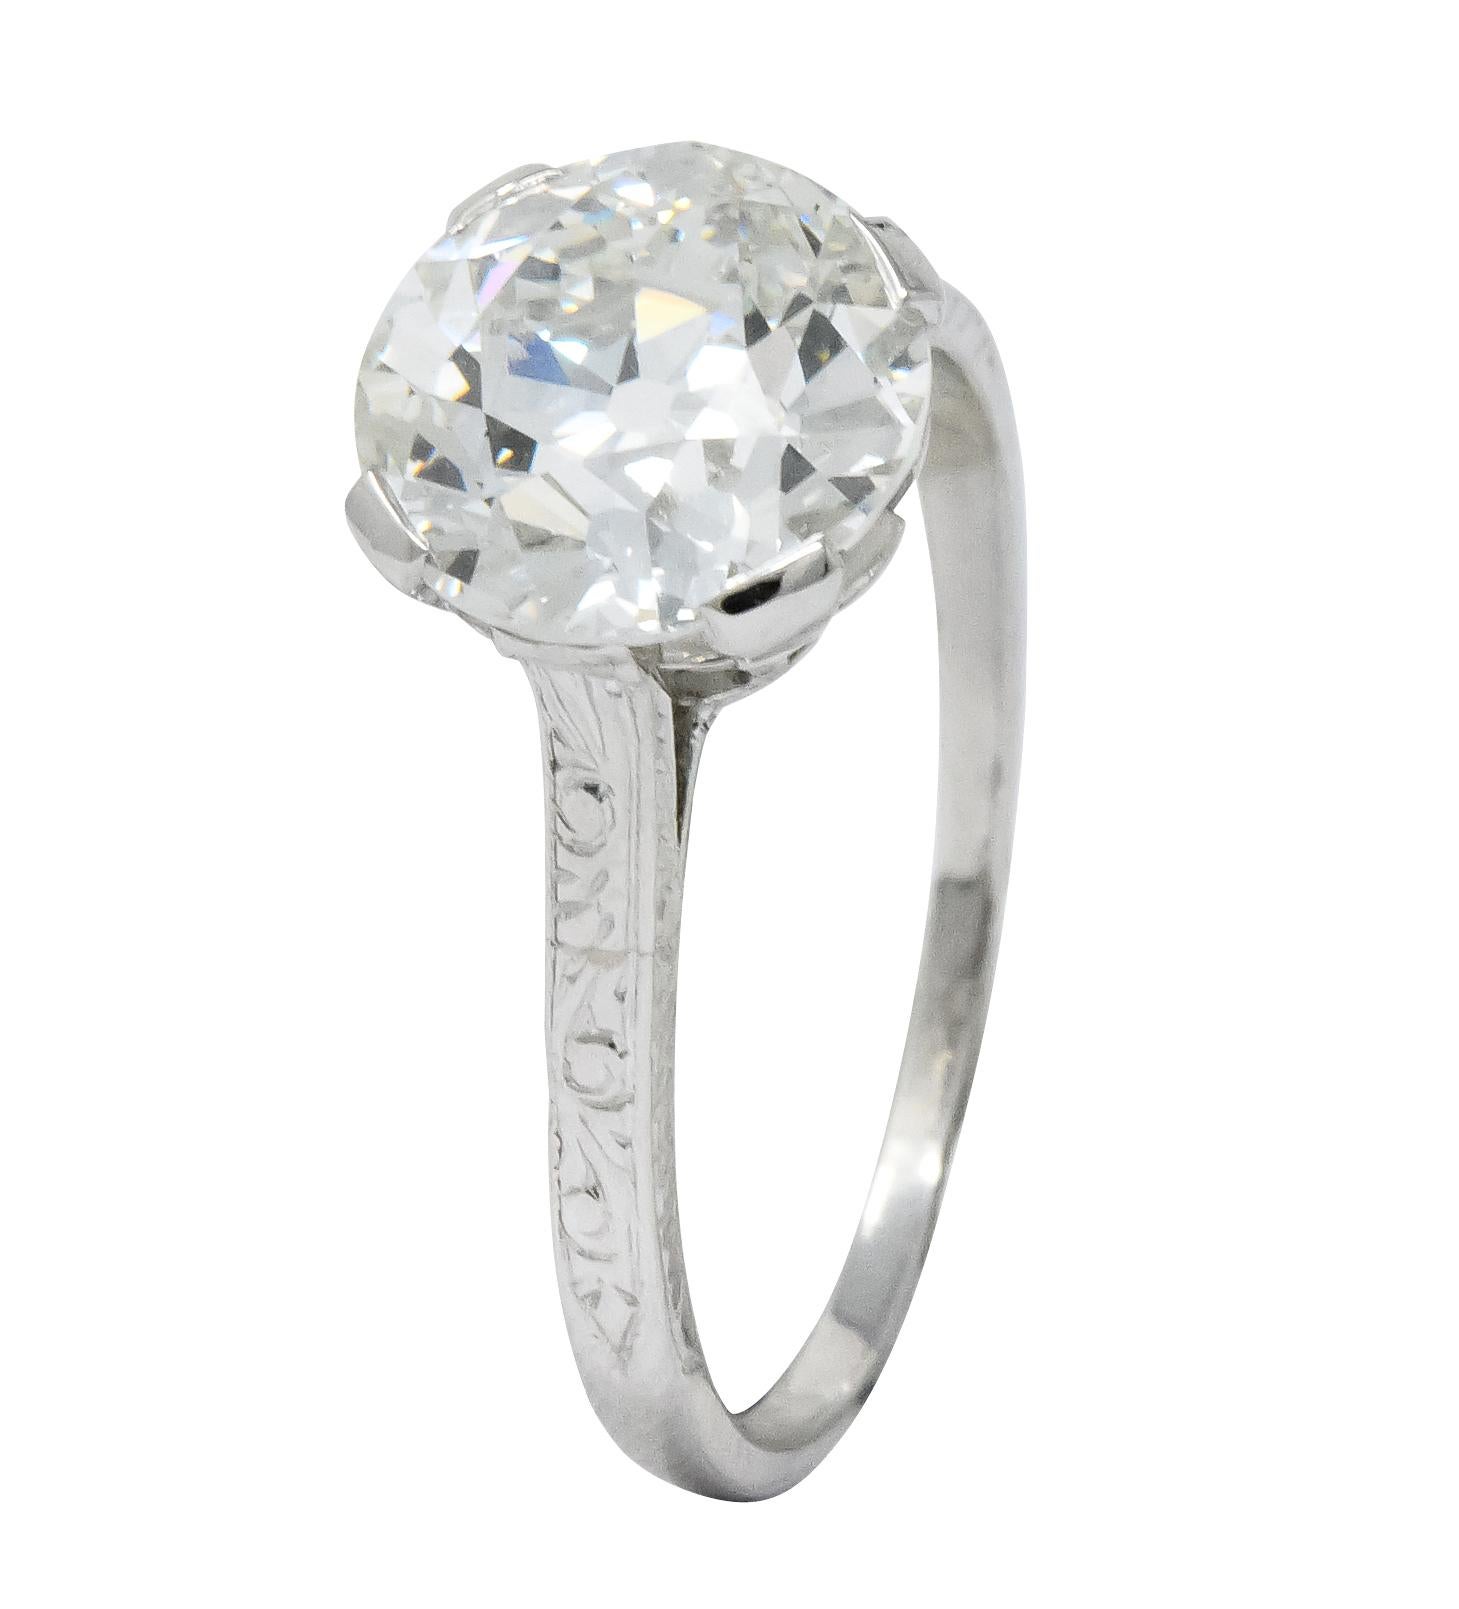 Gillot & Co. 3.21 Carat Old European Diamond Platinum Engagement Ring GIA 2